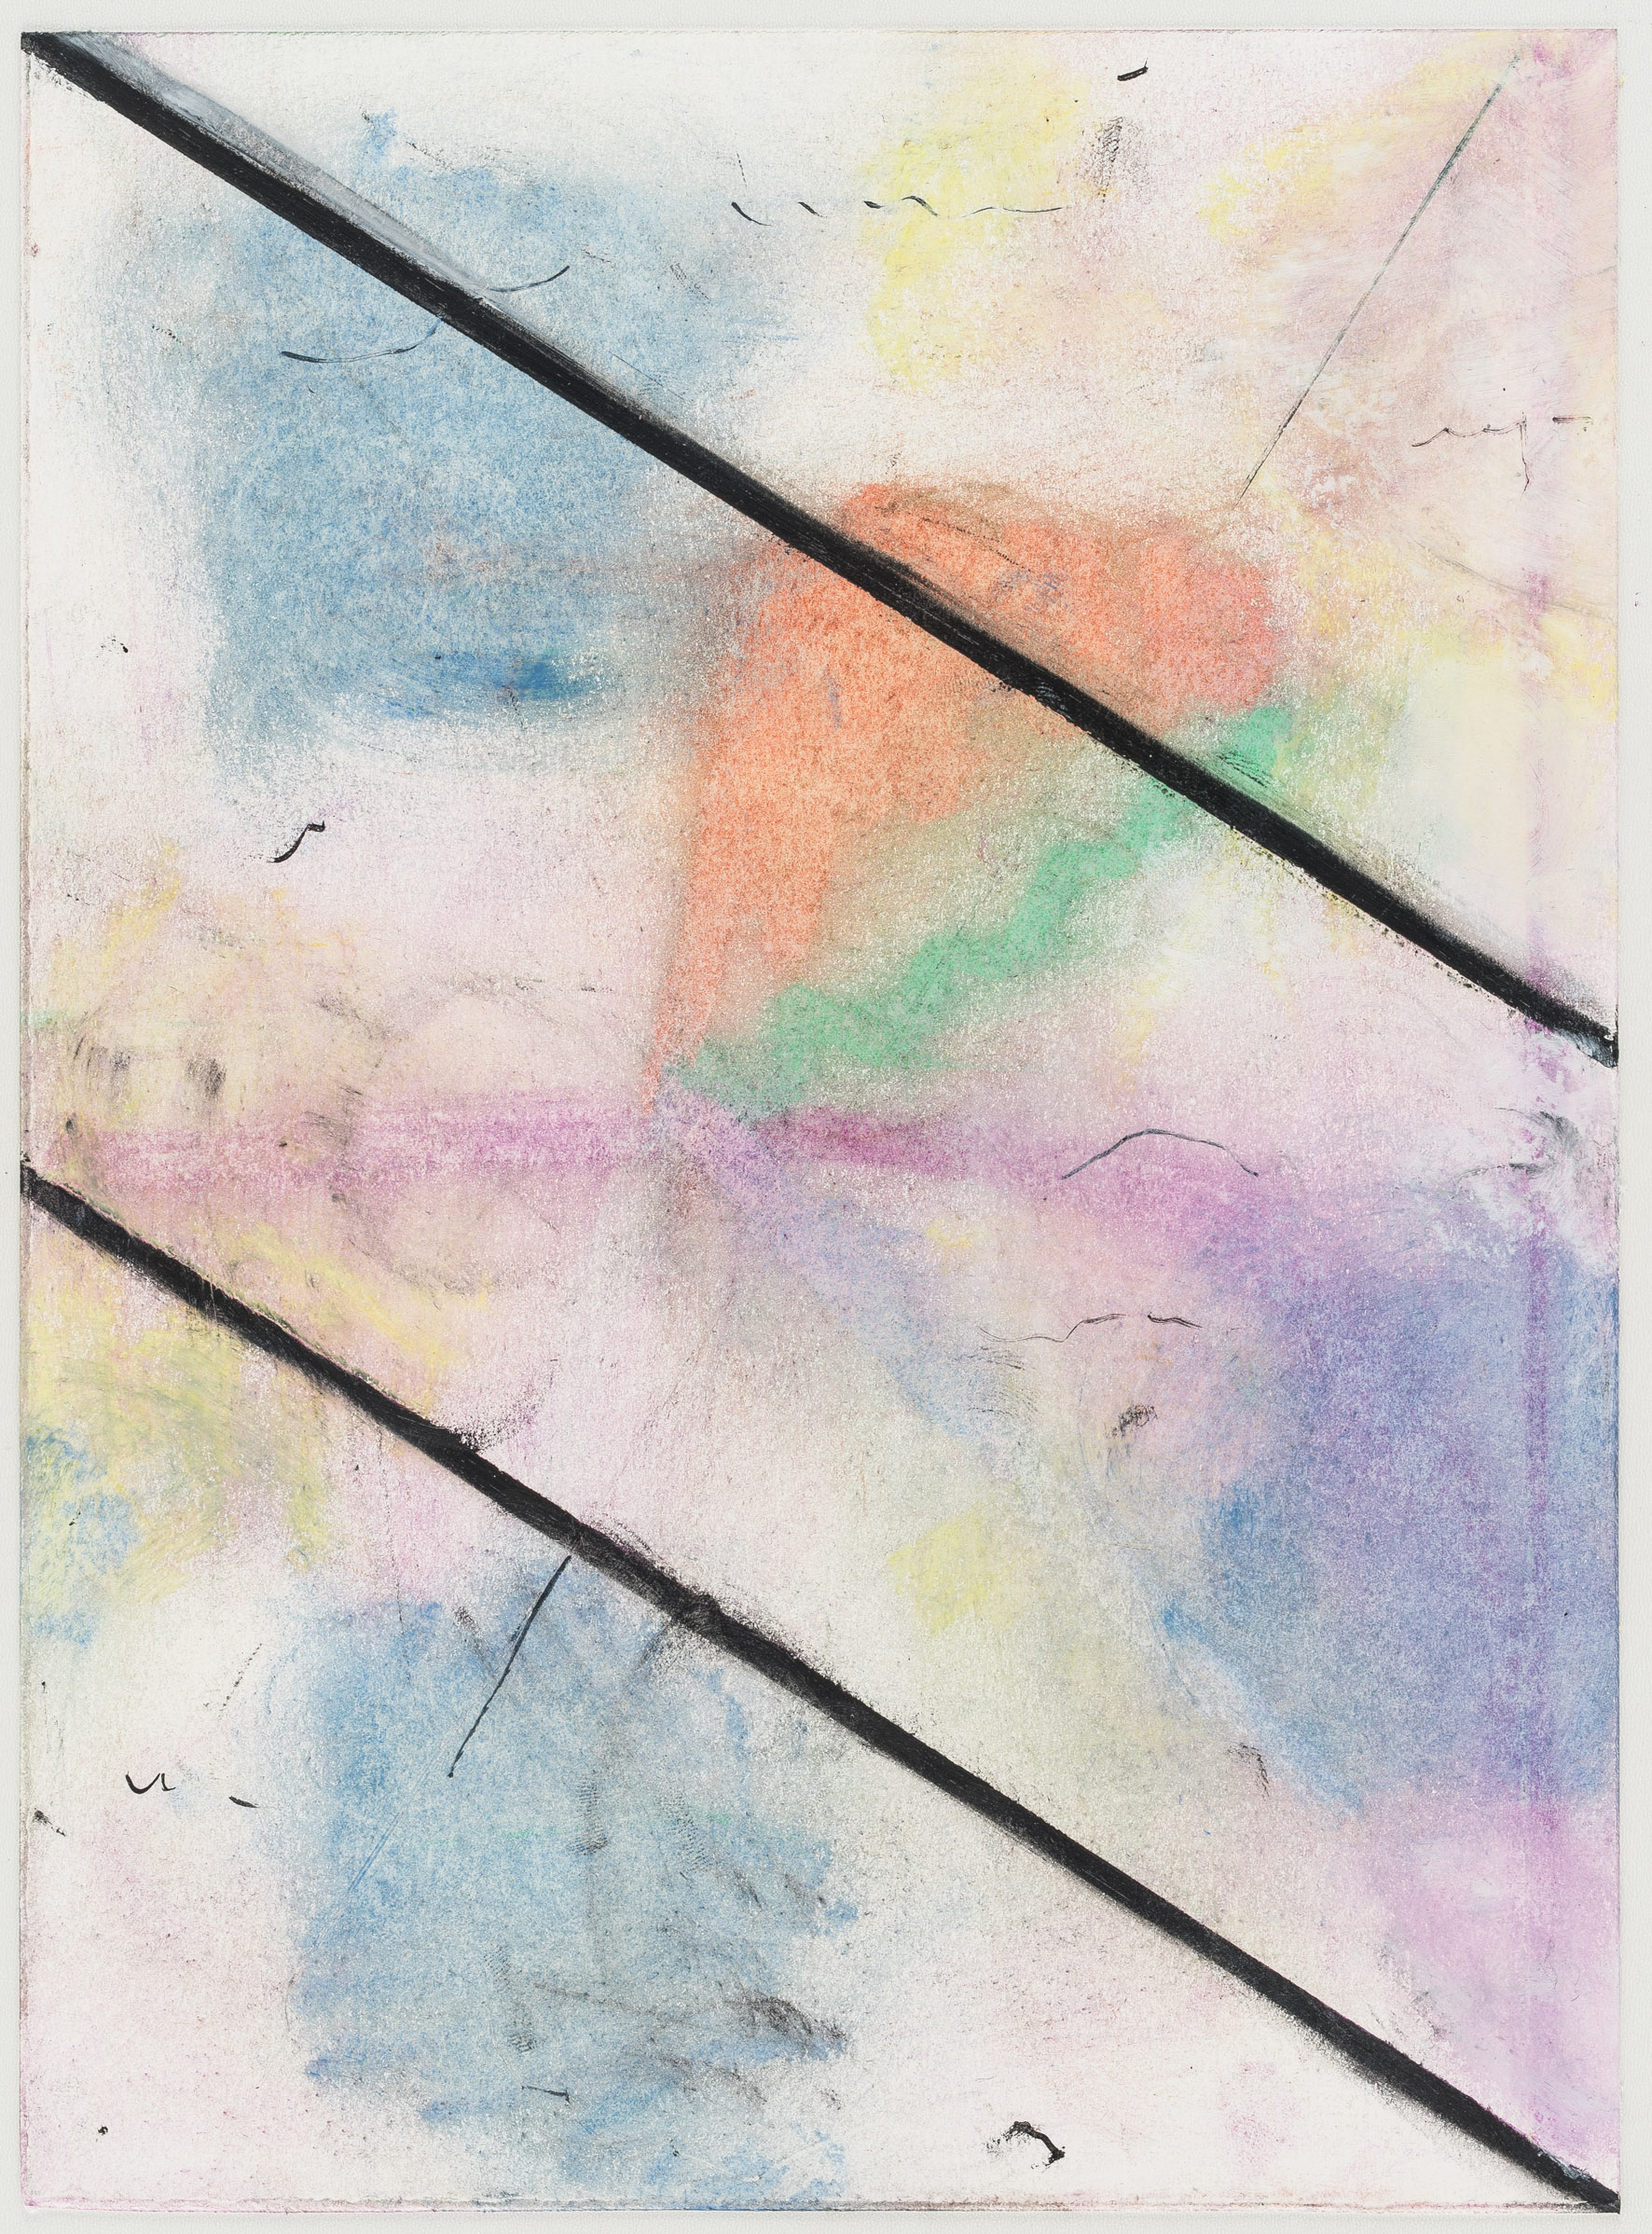 Pius Fox - Luftflug (PF 17-031) Oil pastel on paper 23.7 x 17.4 cm 2017